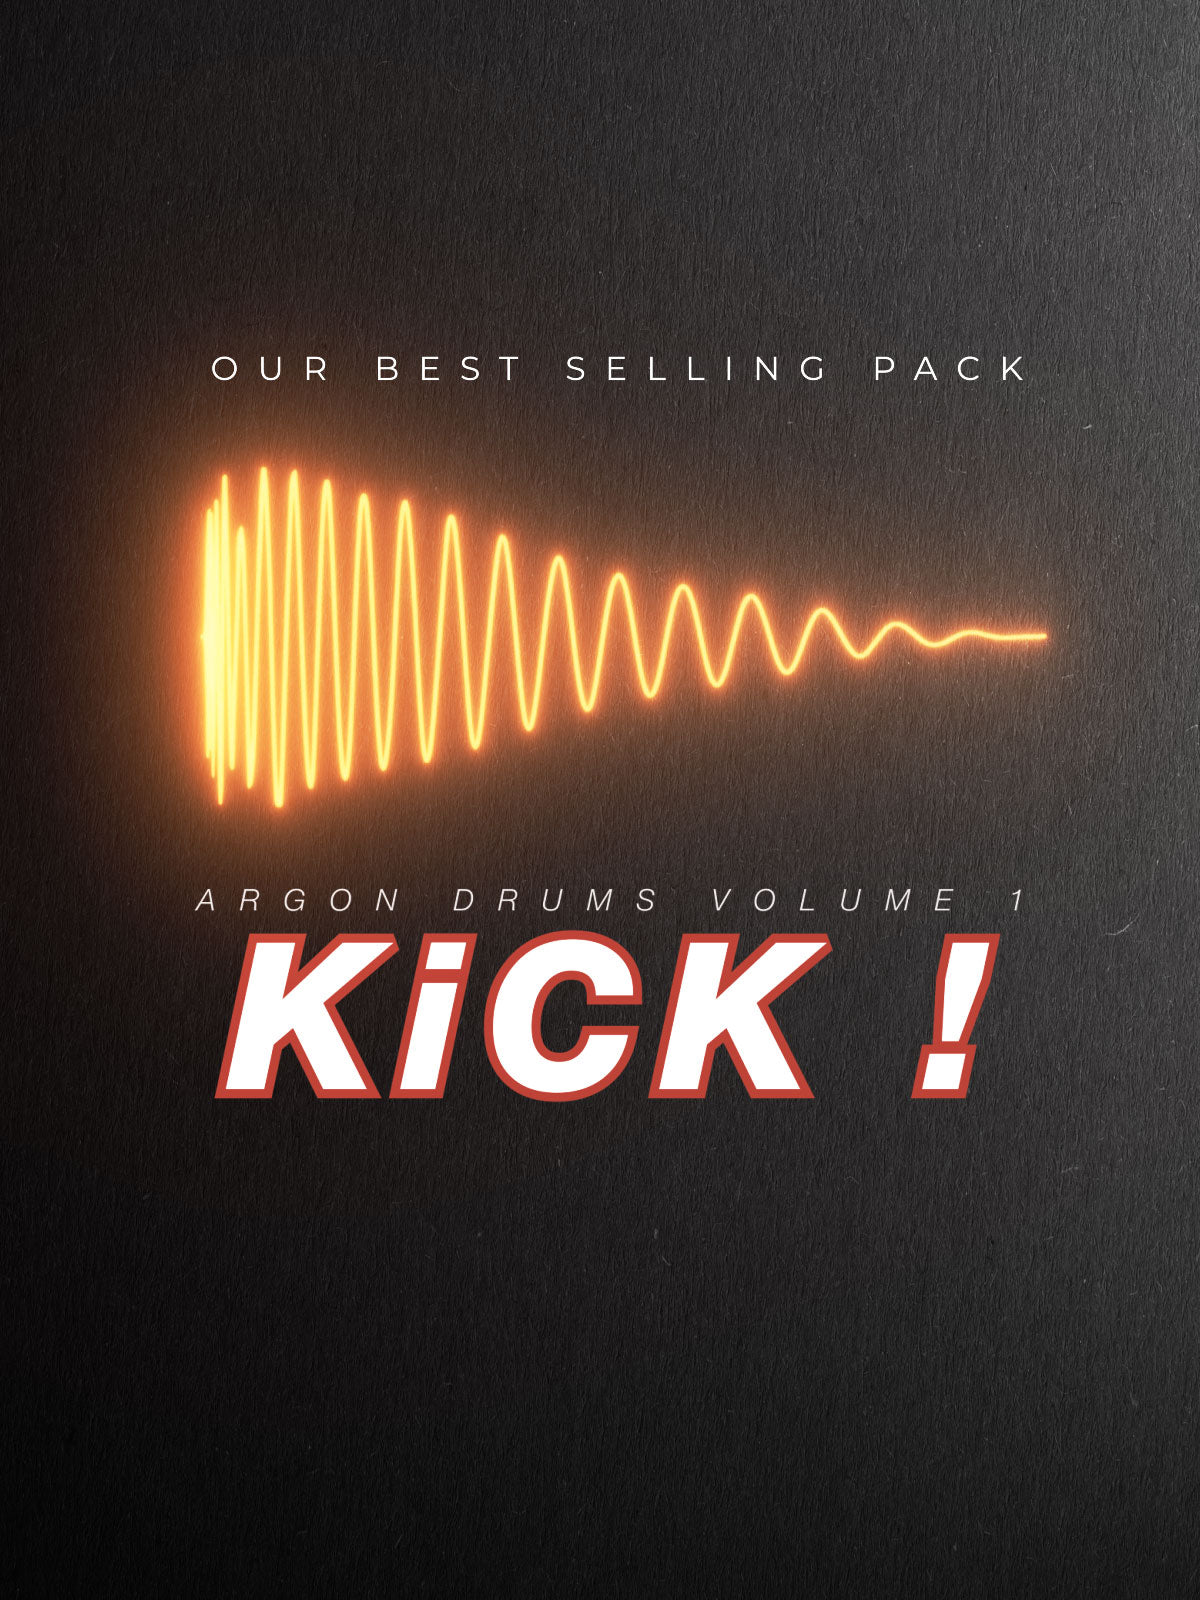 Kick It - BLACKPINK(easy lyrics) 